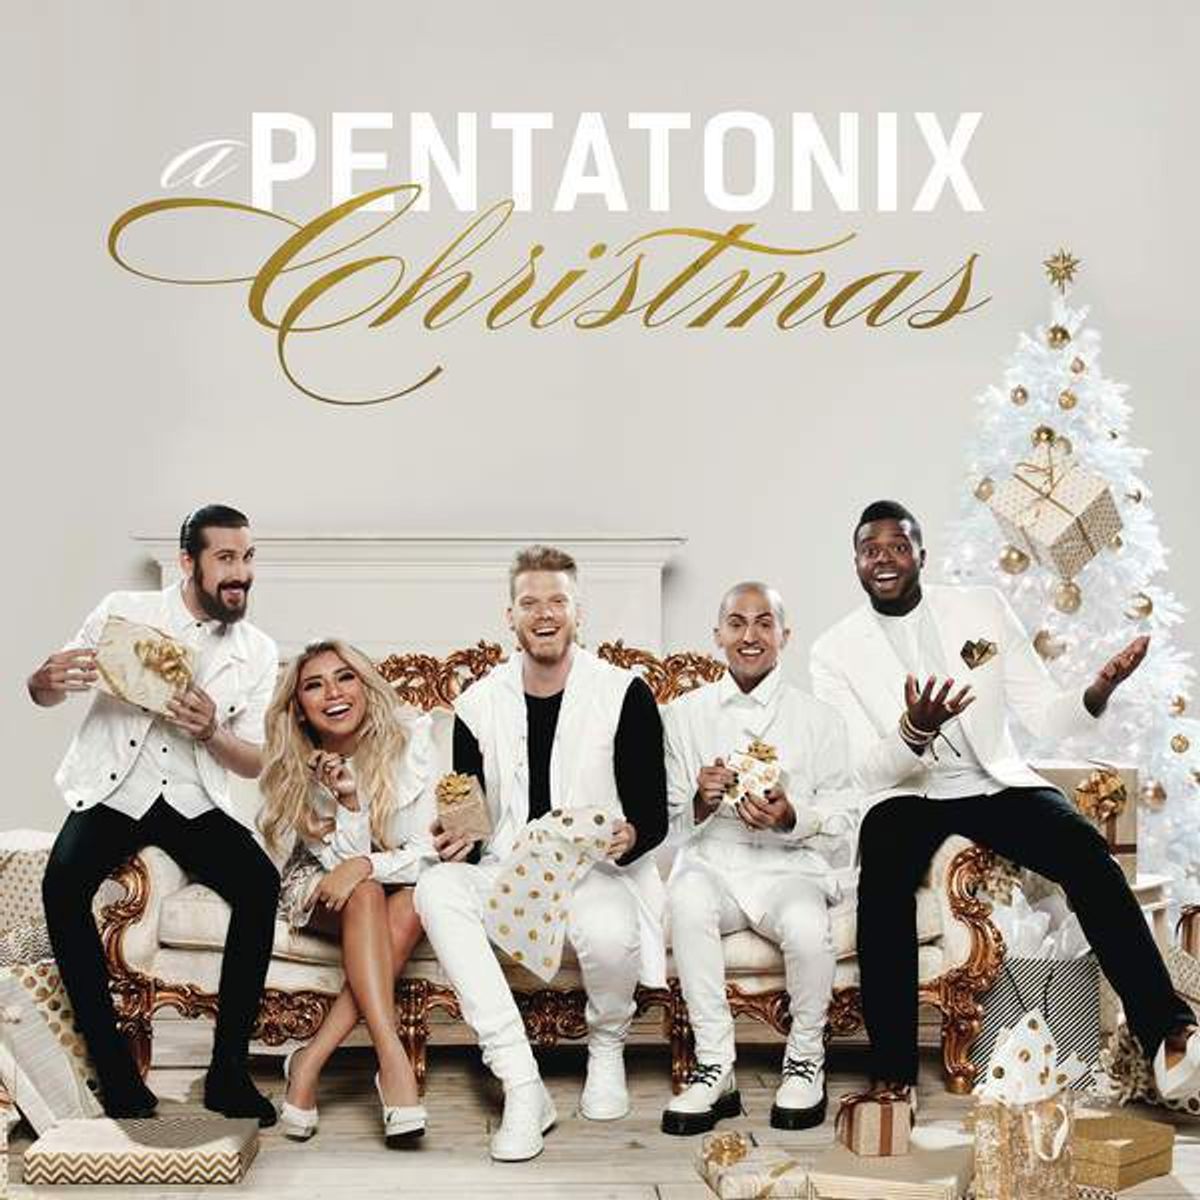 The Top 5 Pentatonix Christmas Songs